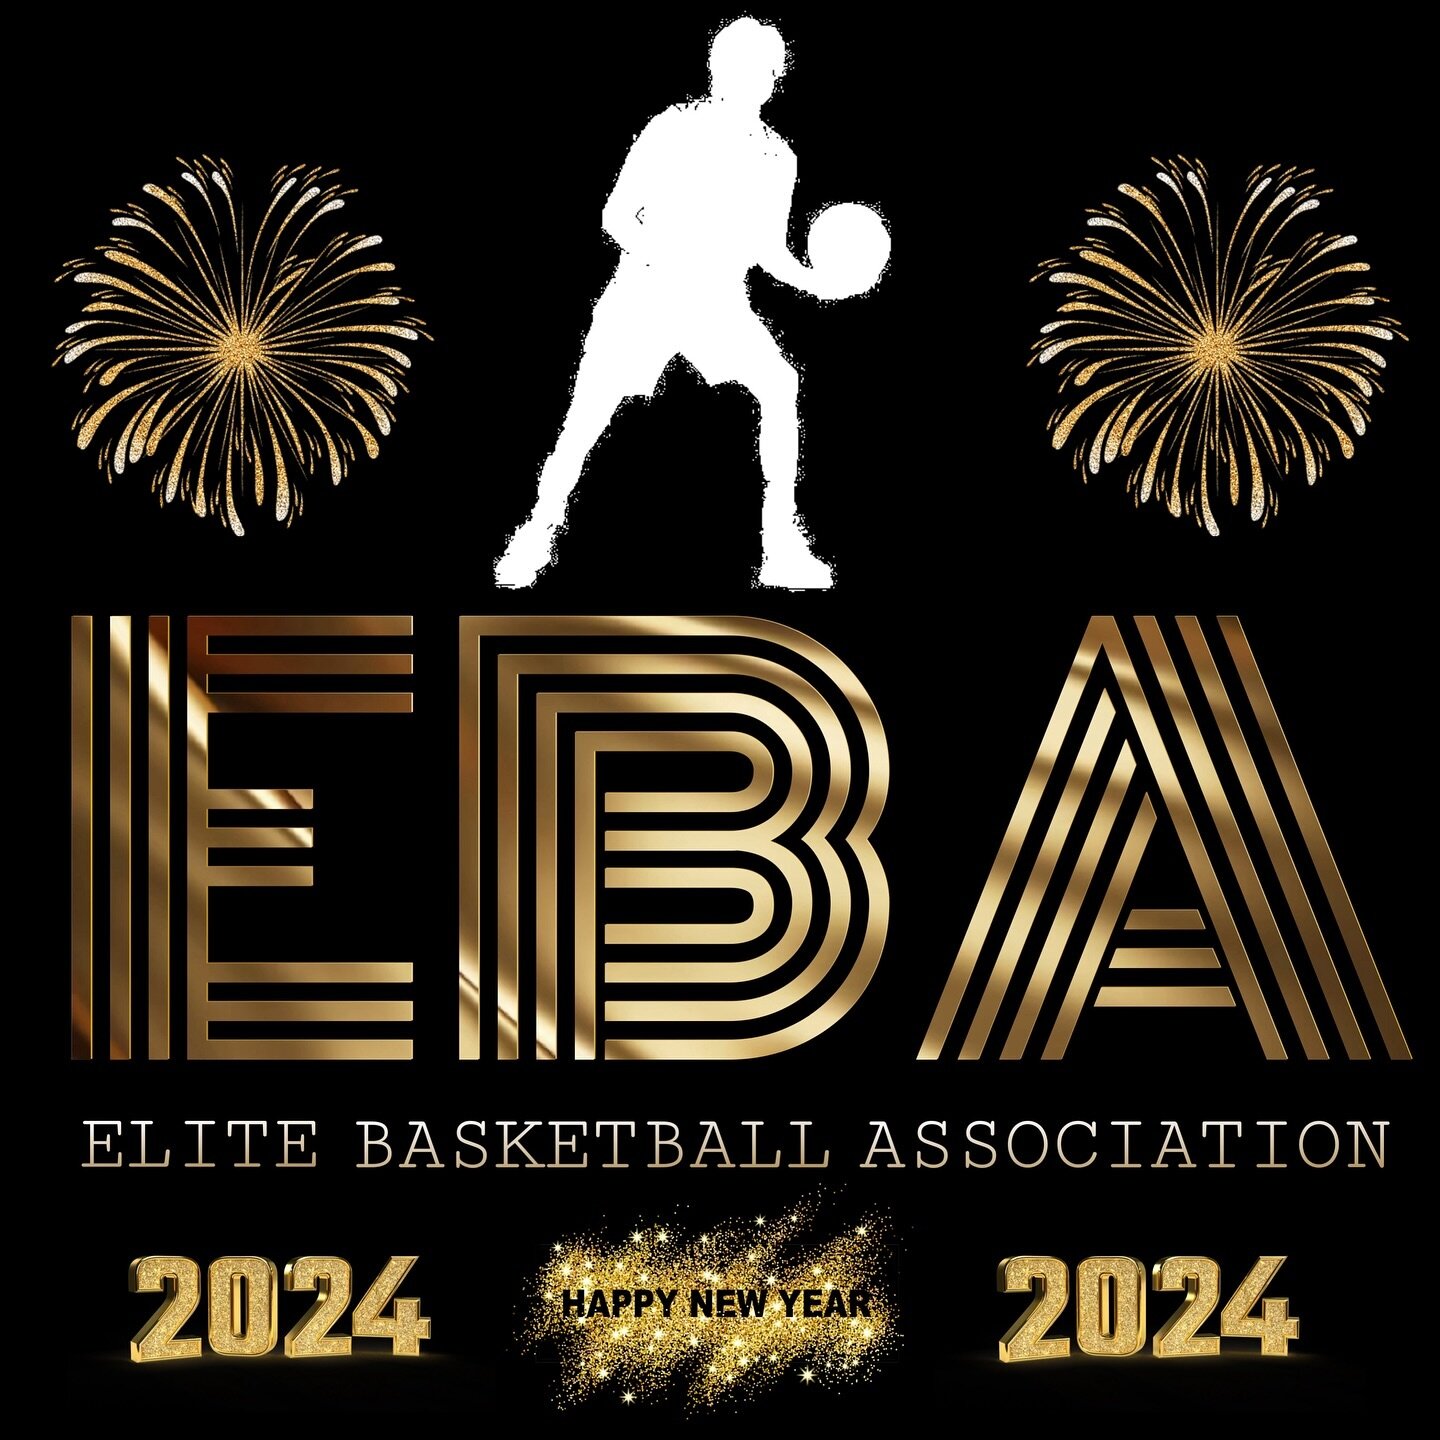 Happy New Year from the EBA! 🏀🎉

#basketball #basketballtraining #boston #ballislife #massachusetts